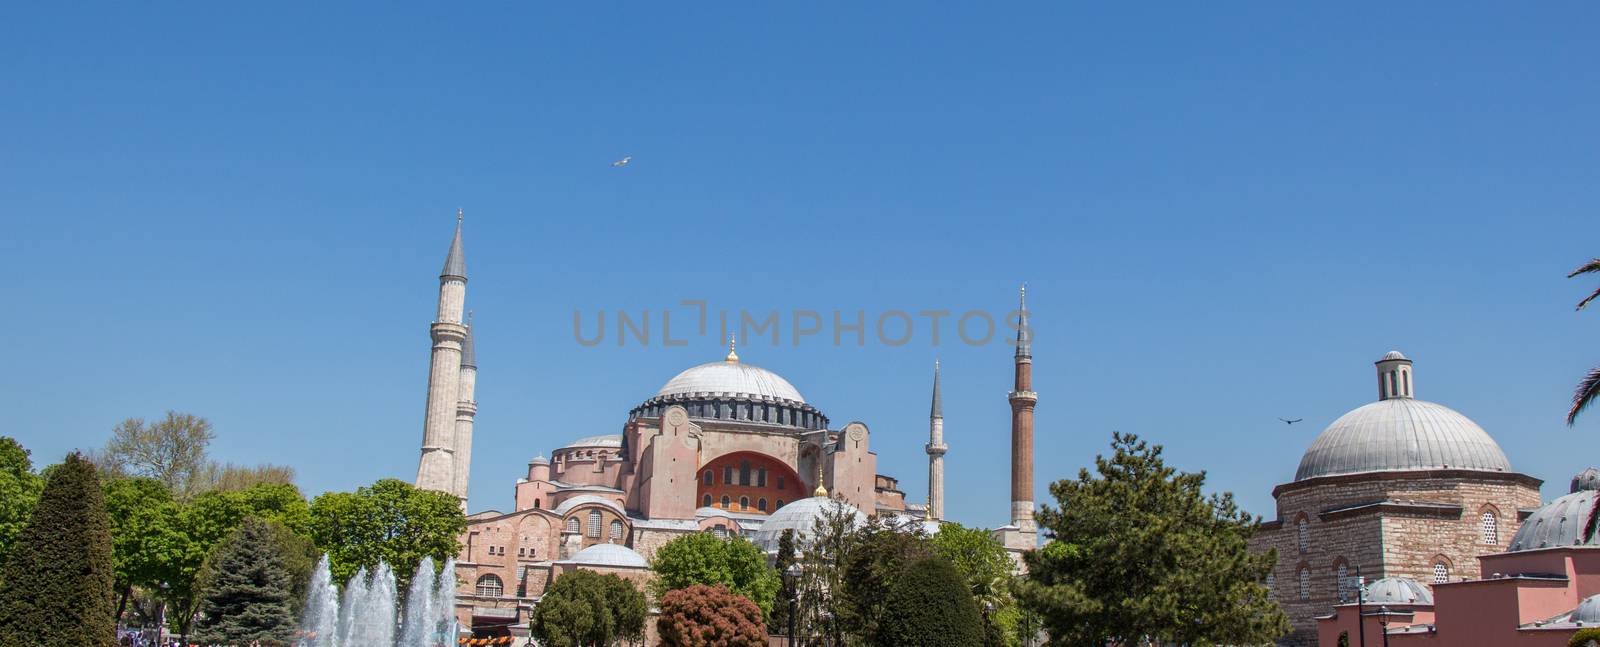 Hagia Sophia,  the world famous monument  by berkay